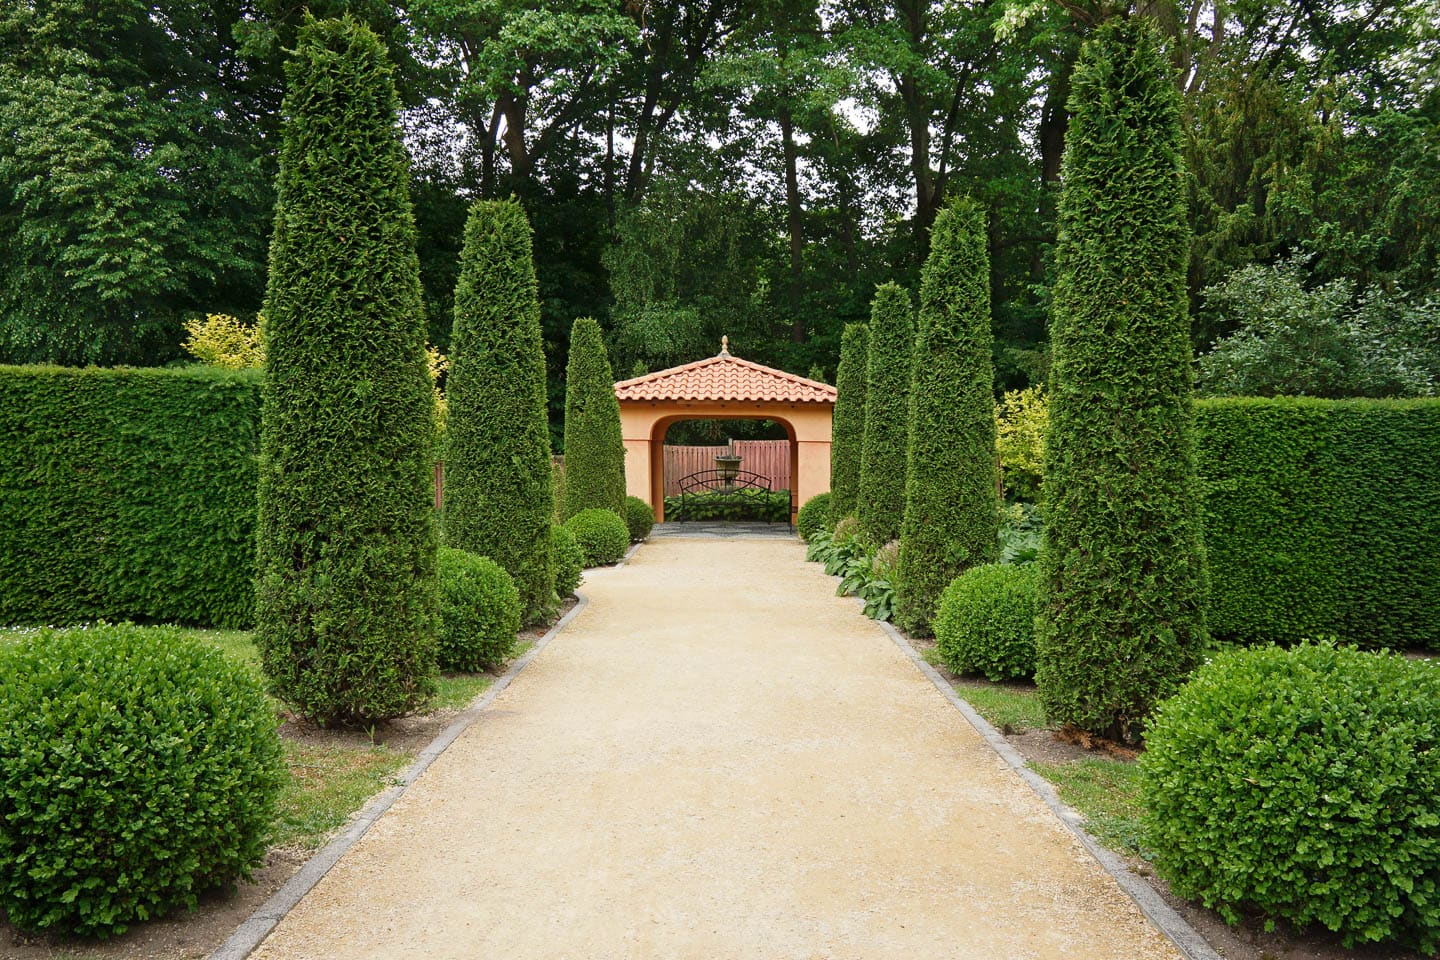 Italian symmetrical garden with a central path leading to a pergola